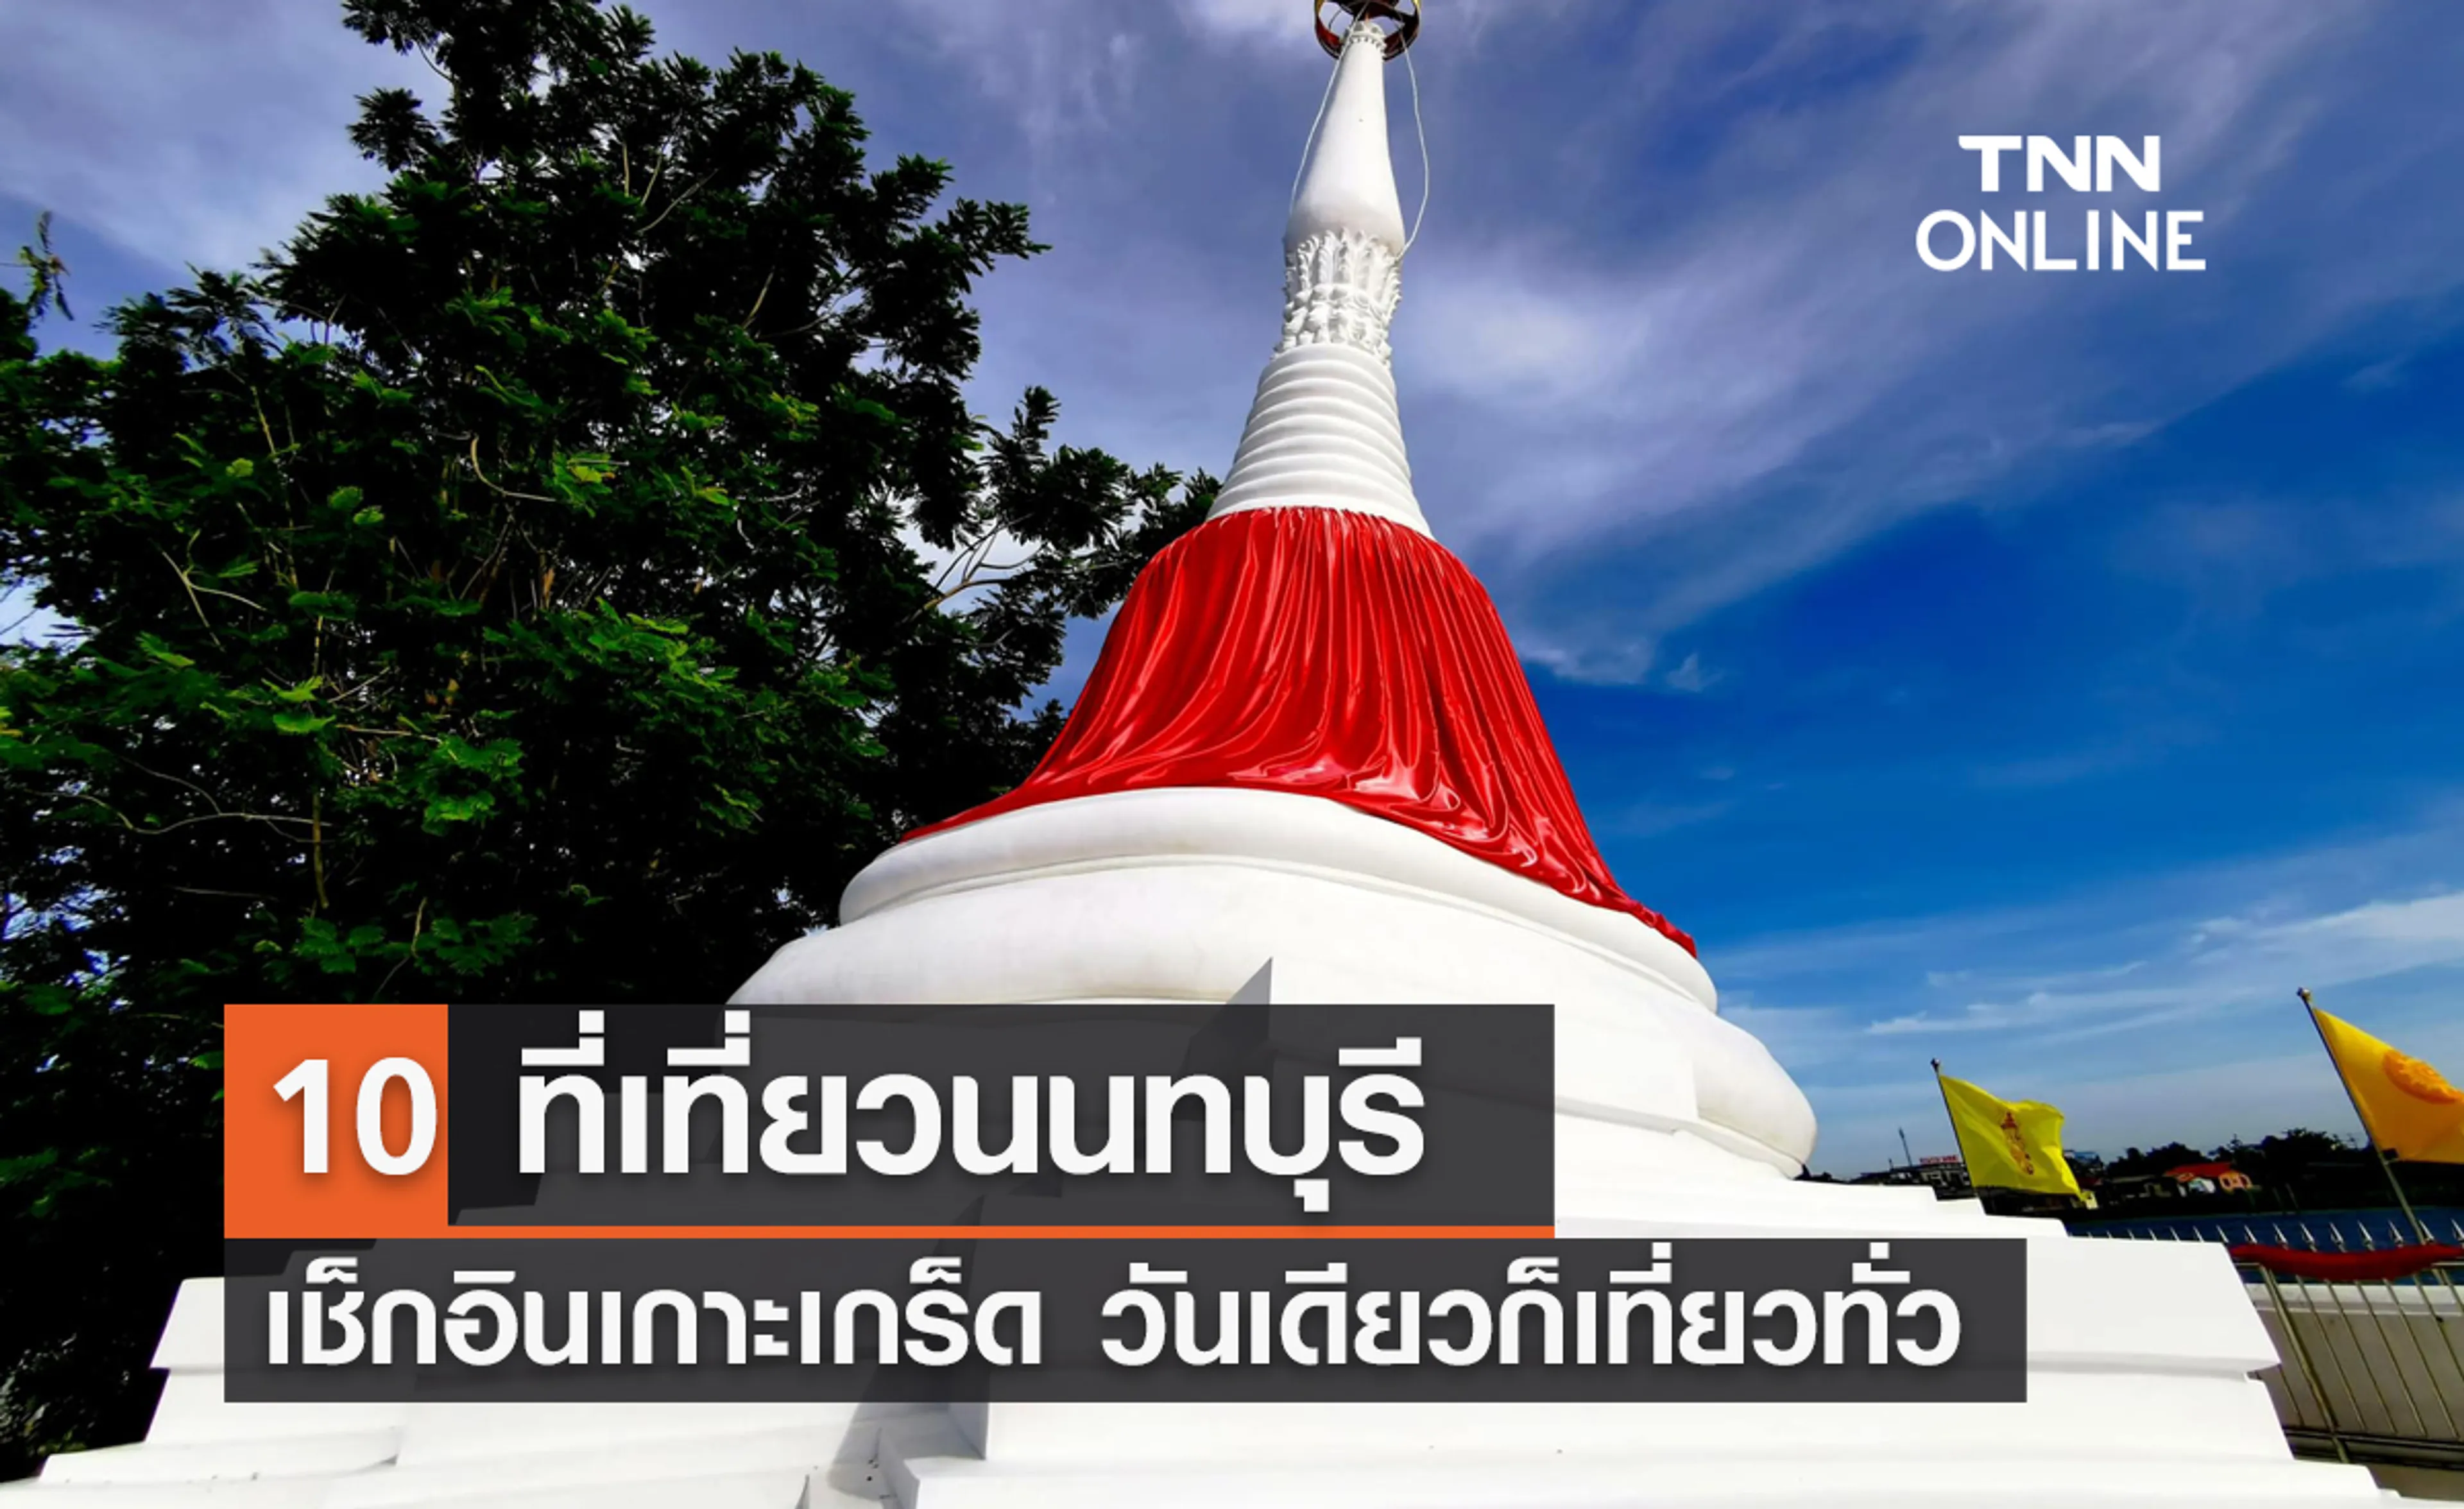 8 places to visit in Nonthaburi